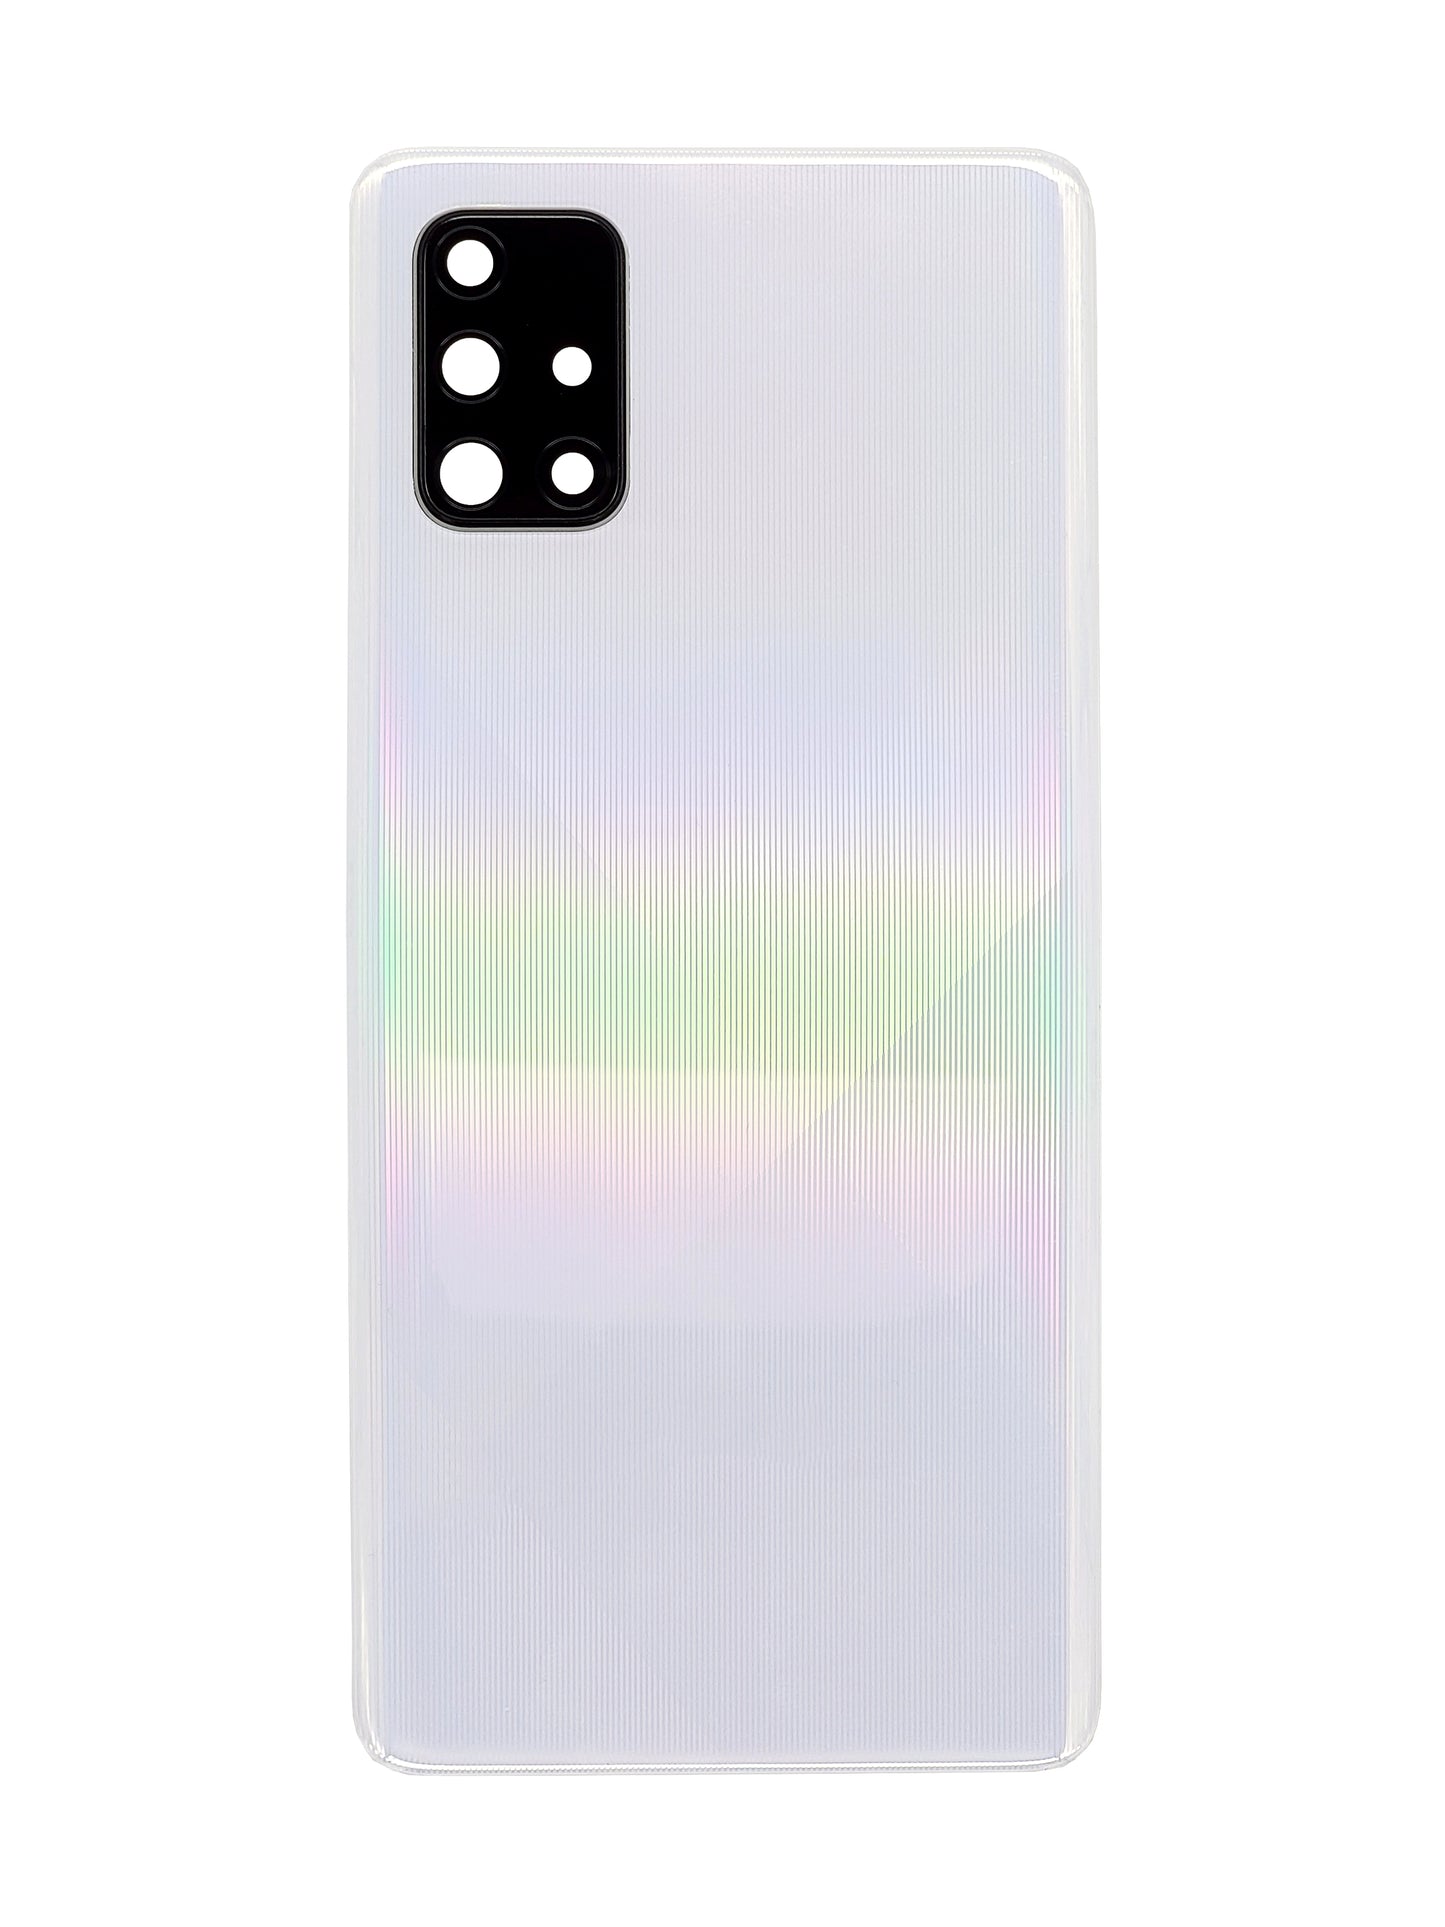 SGA A71 2020 (A715) Back Cover (White)